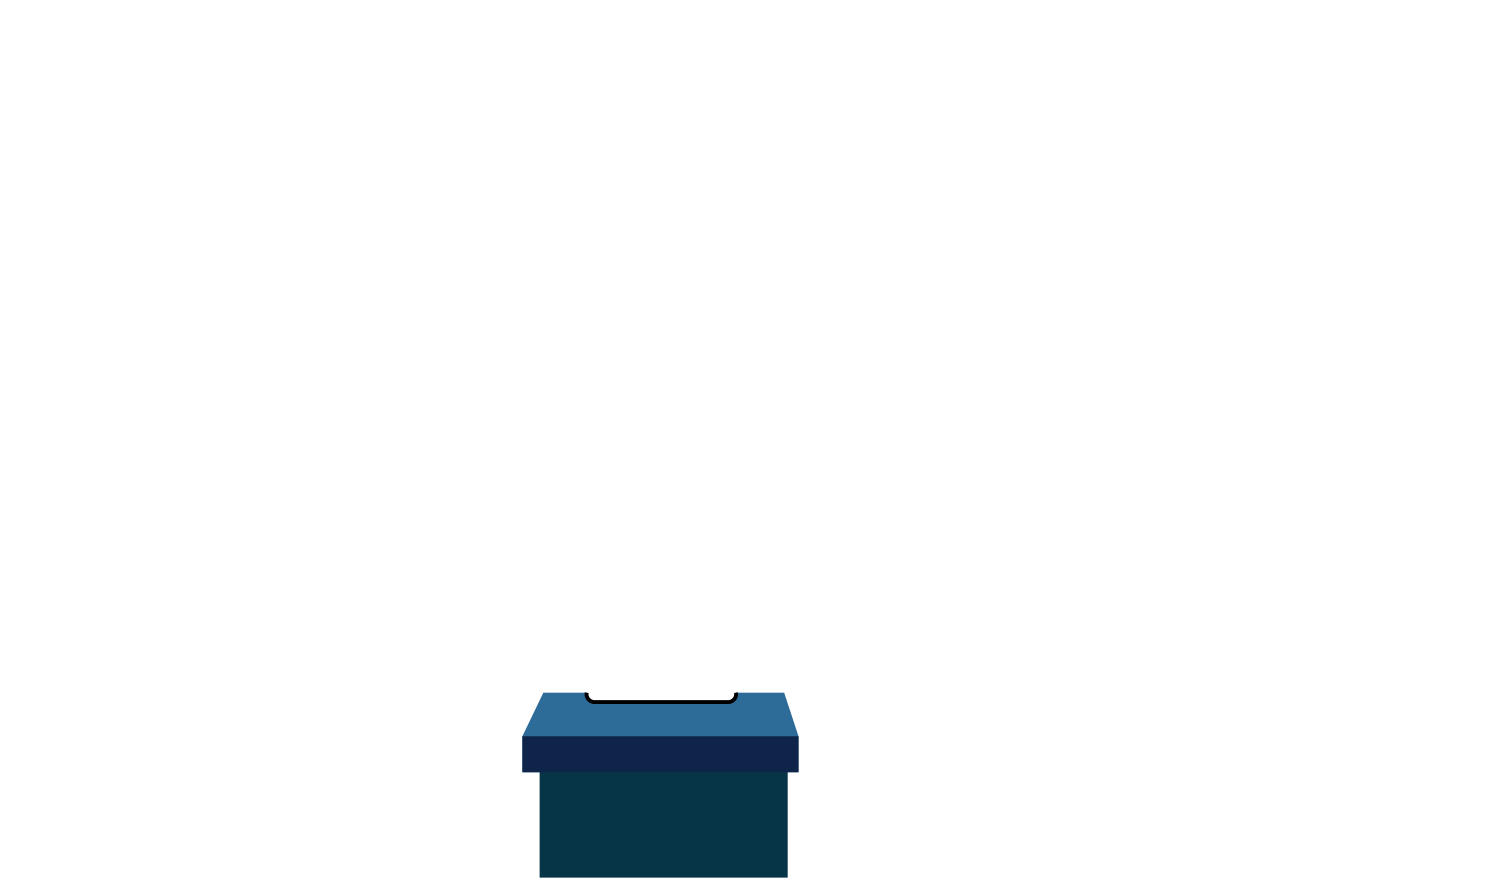 ballot box illustration